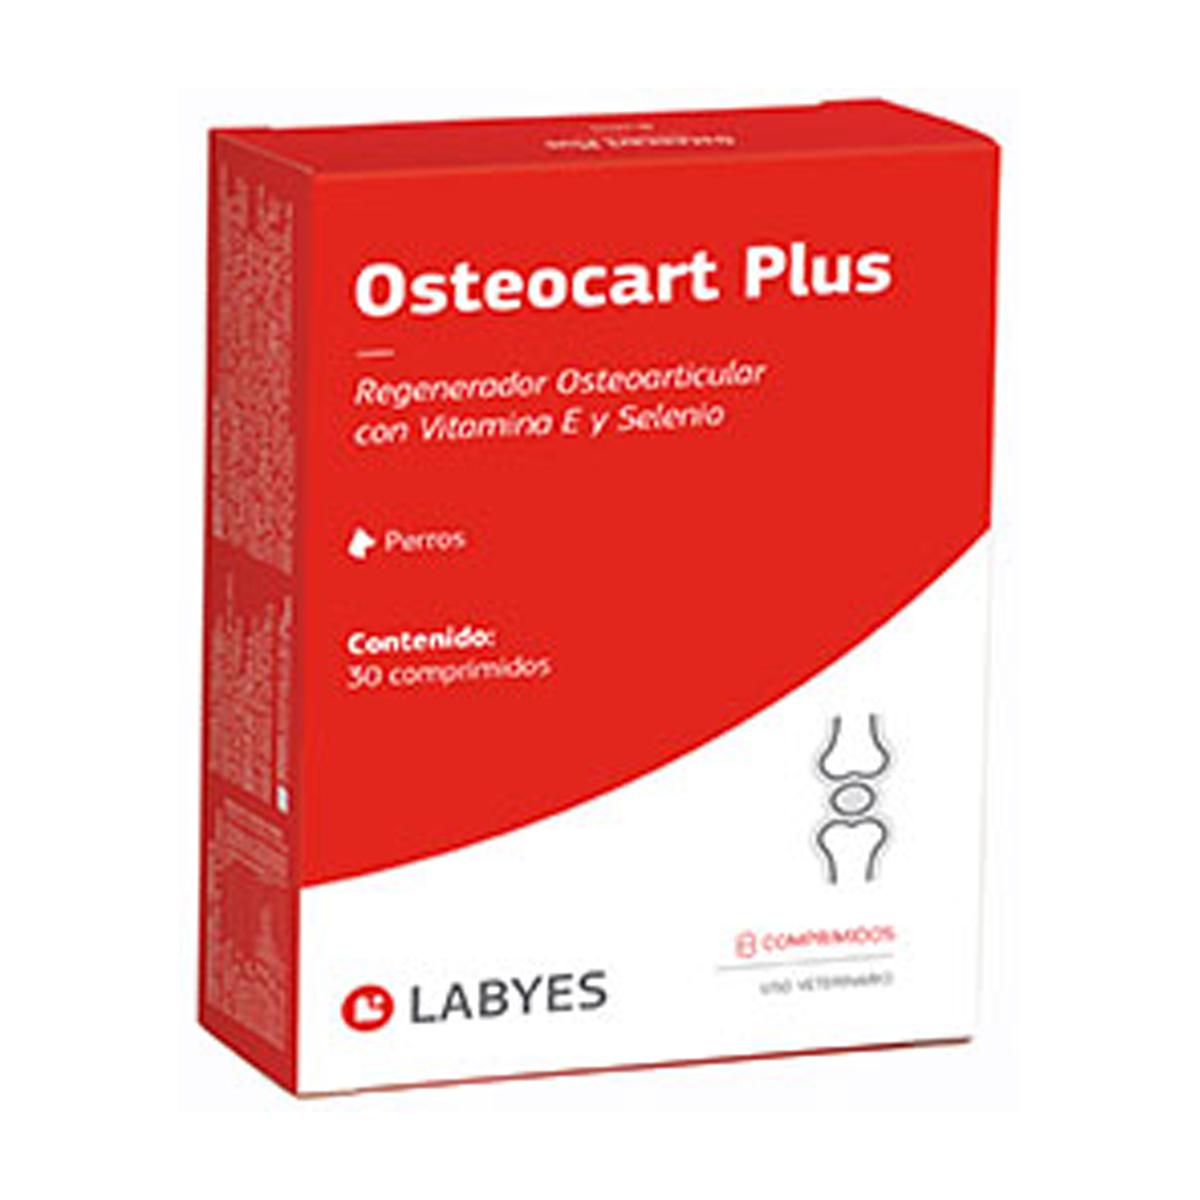 Osteocart Plus